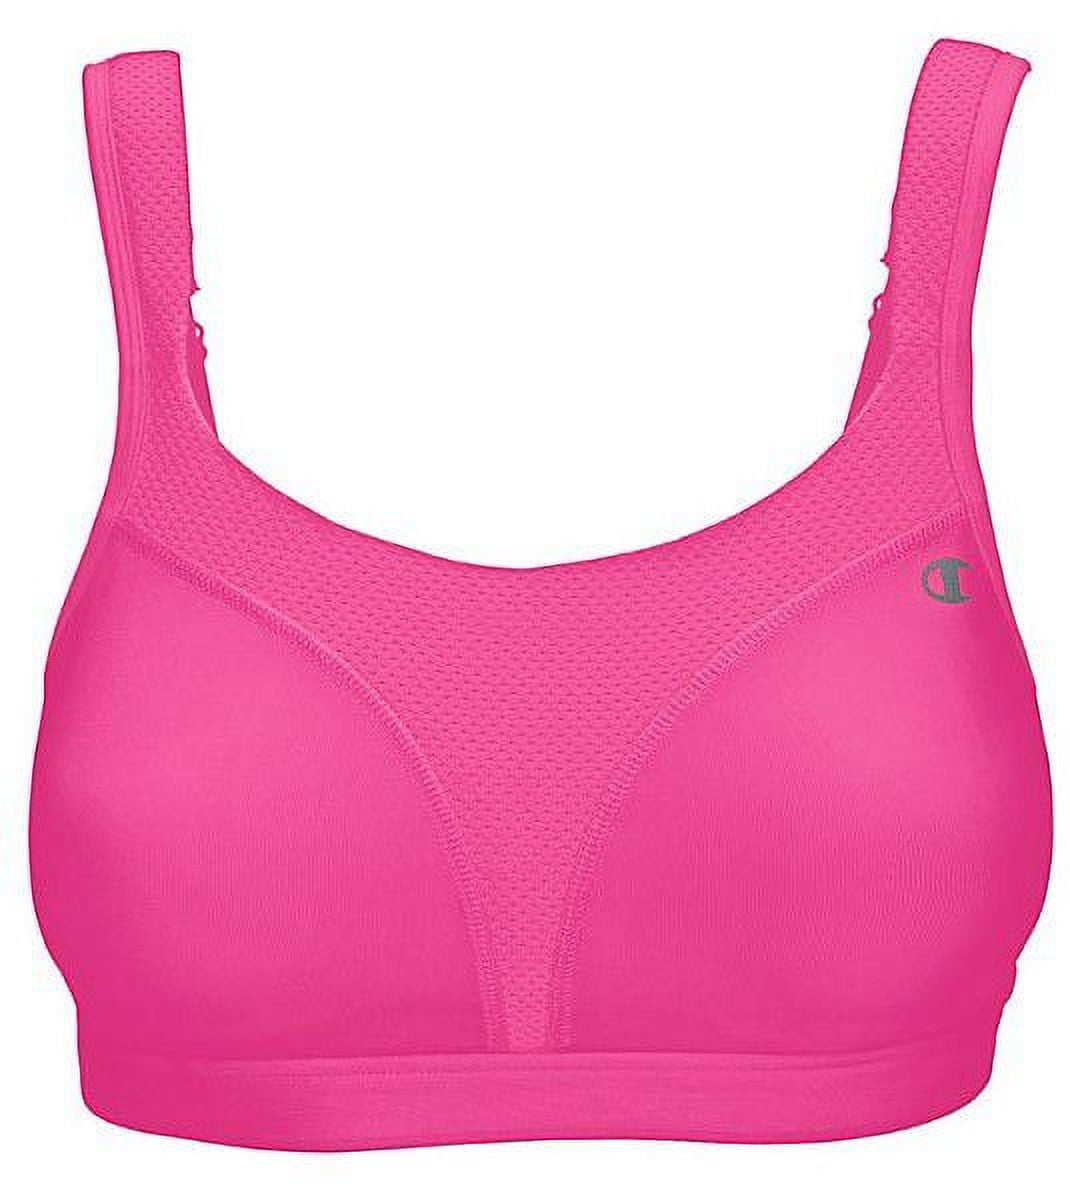 C9 by Champion Sports Bra Women's Pink Activewear Light-Medium Support Small  S